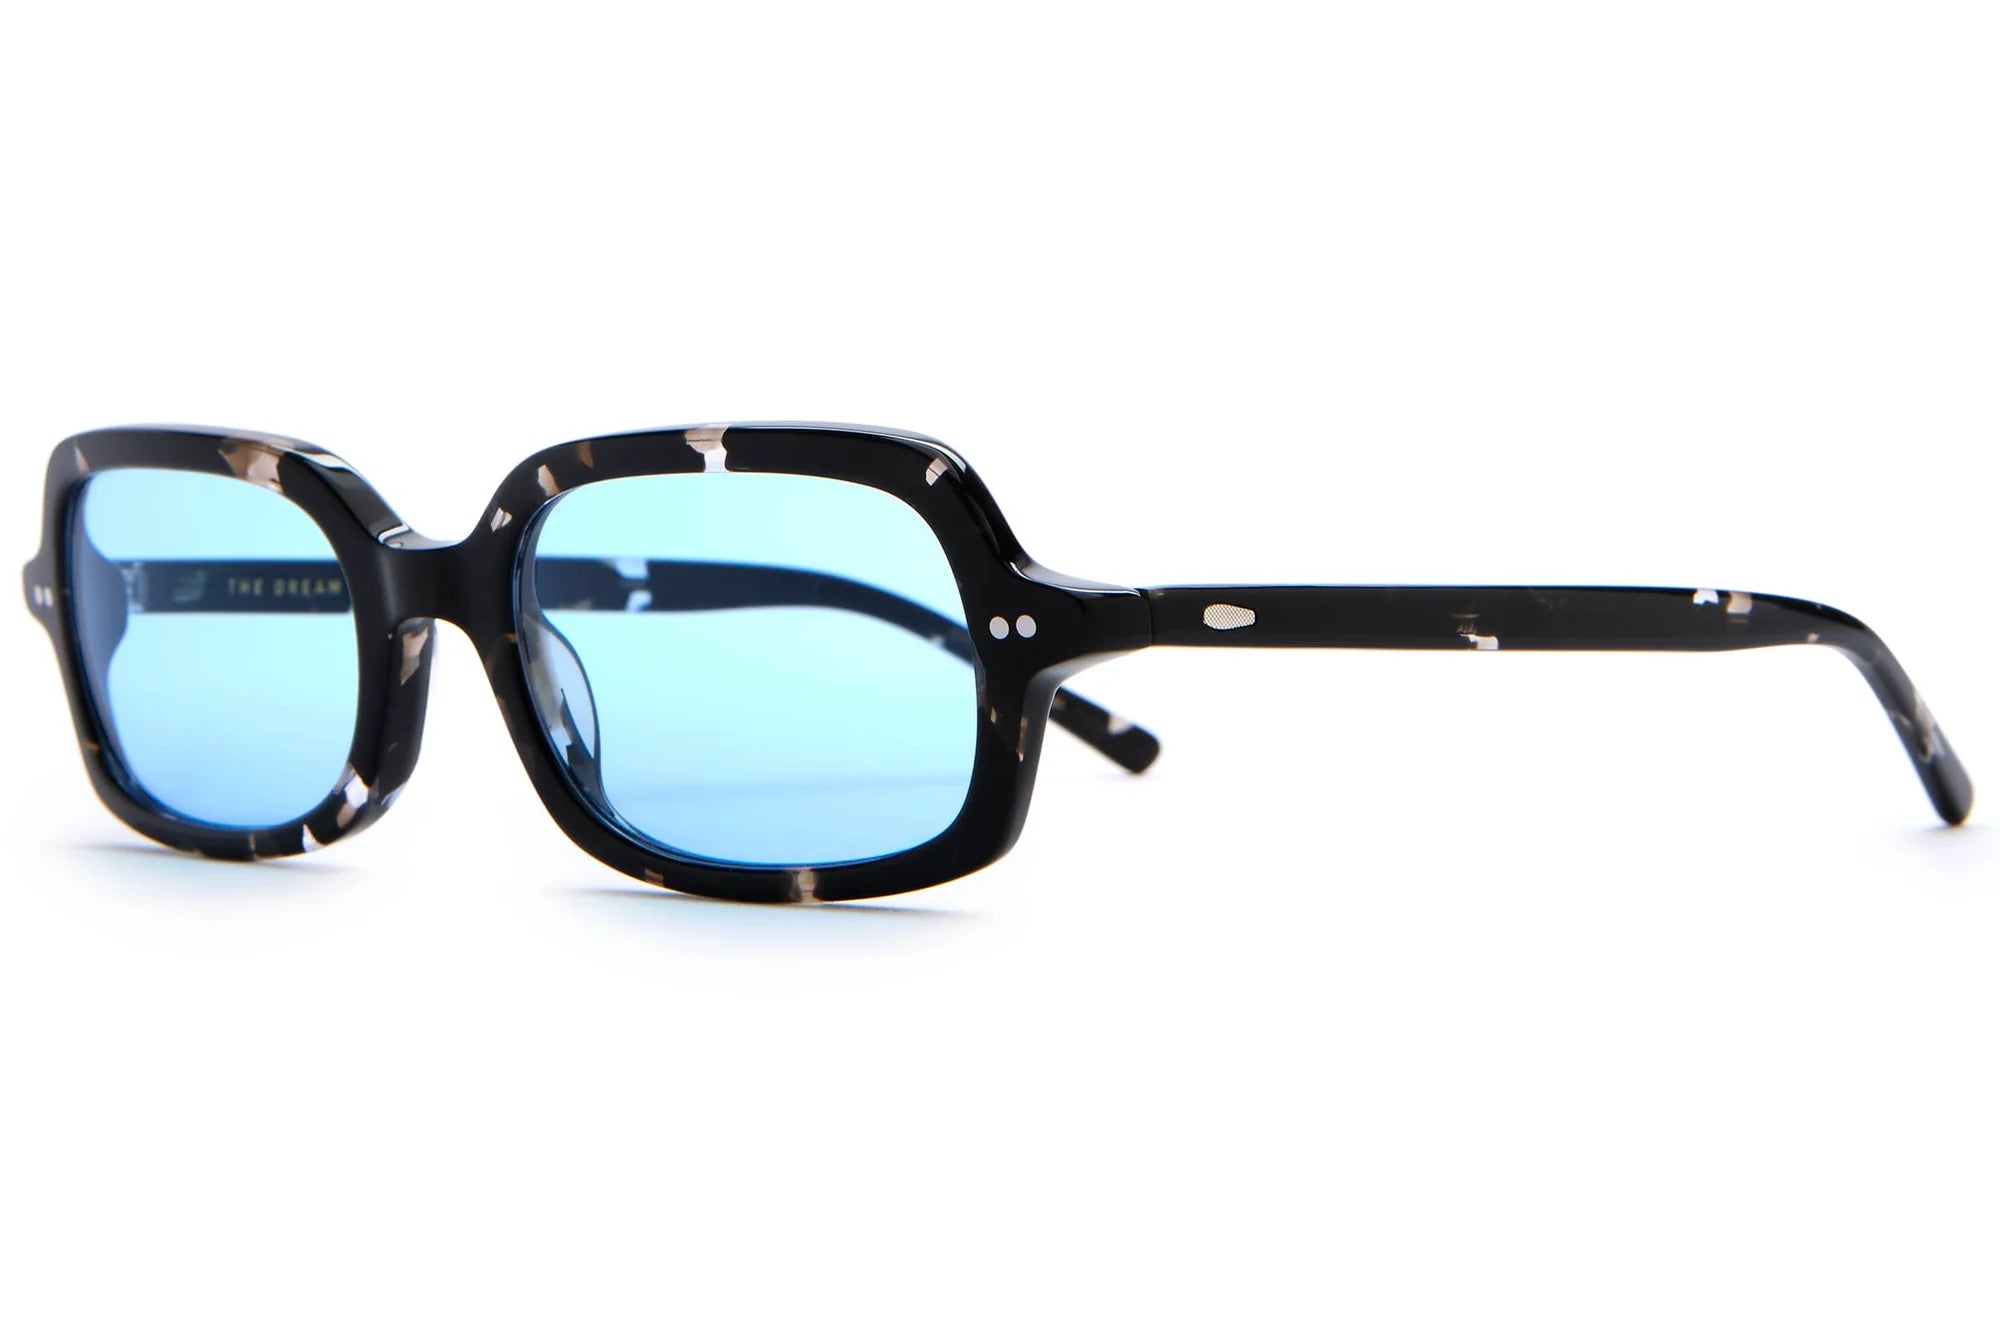 The Dream Cassette in Blue Tint Bio Sunglasses